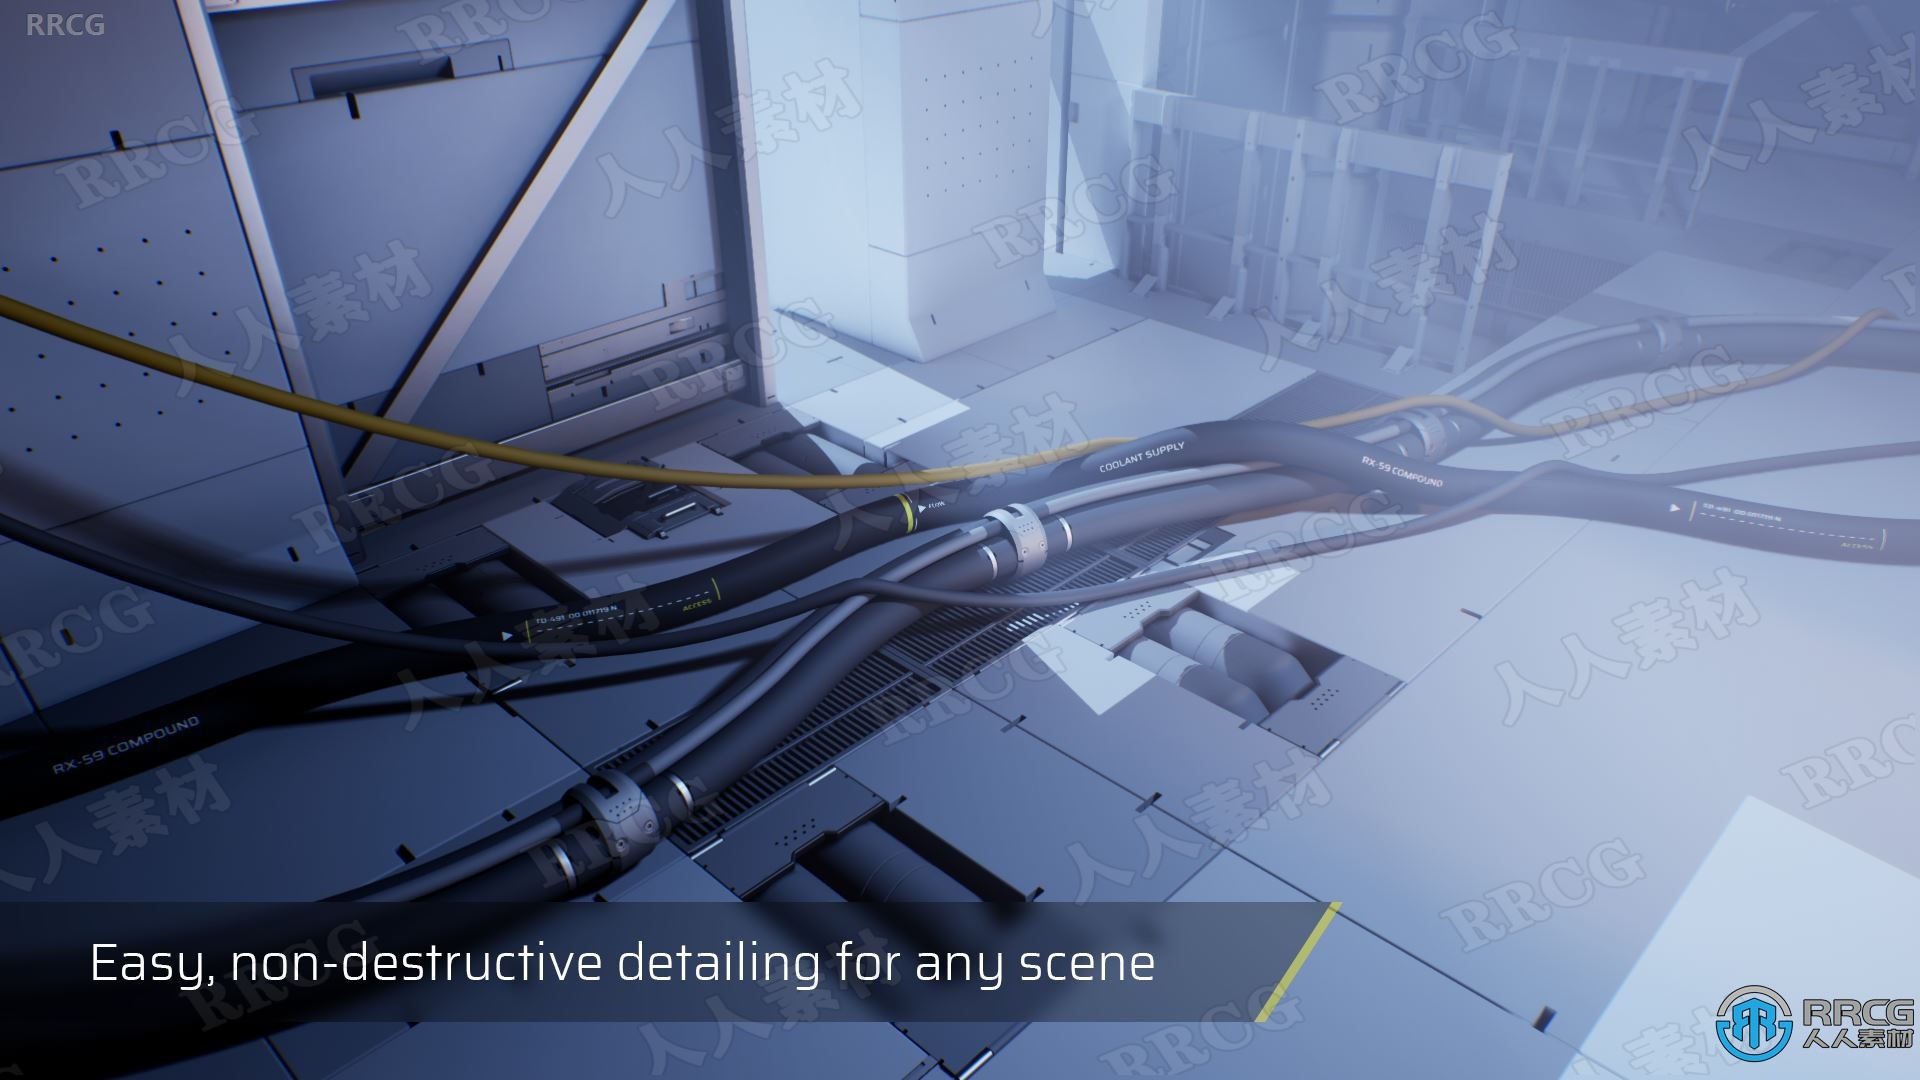 Tether程序性电缆绳索Unreal Engine游戏素材资源